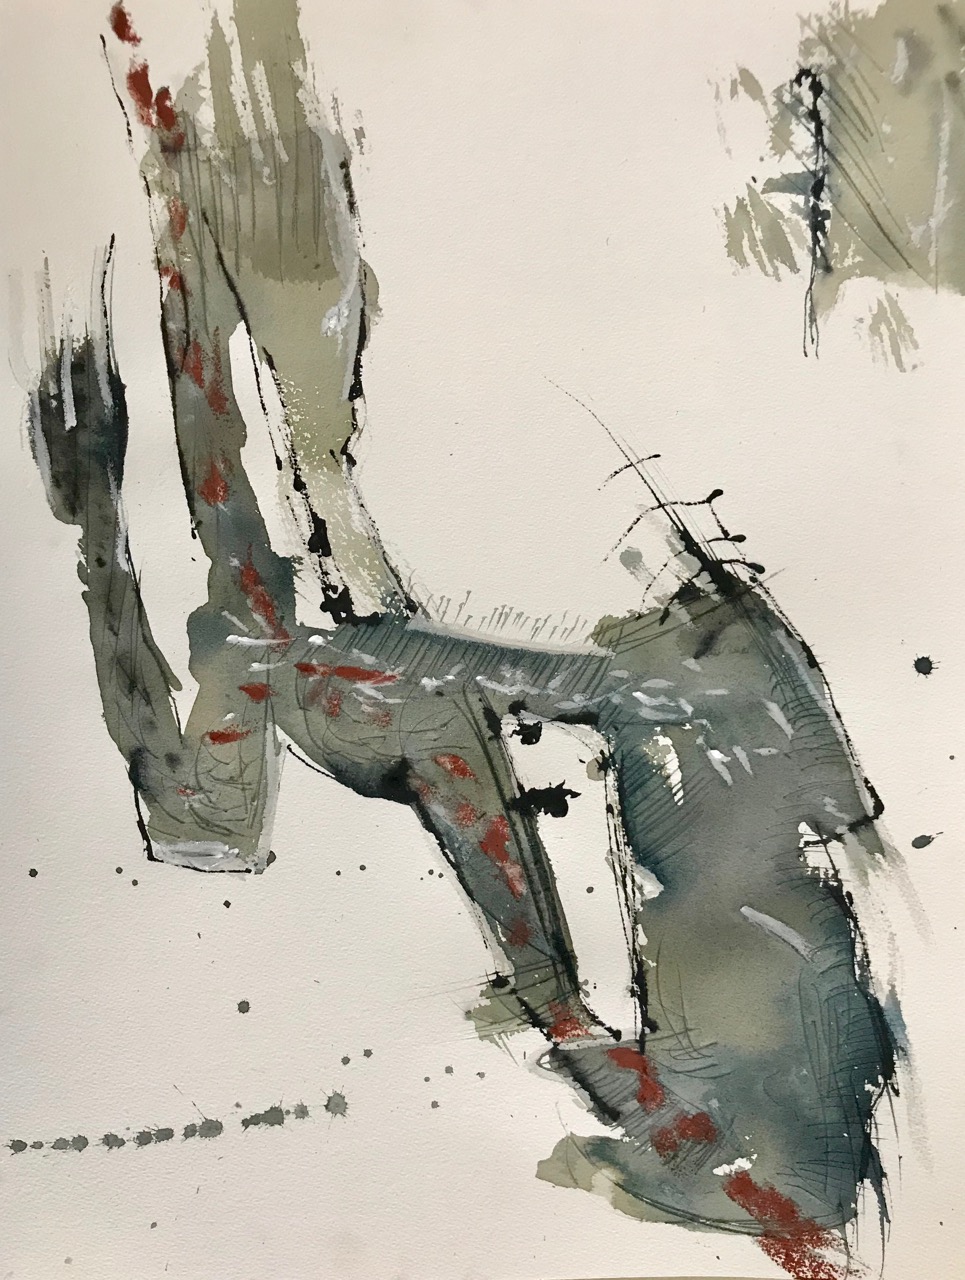 Hi There!, Aquarell und Tusche auf Papier, 46 x 61 cm, 2018